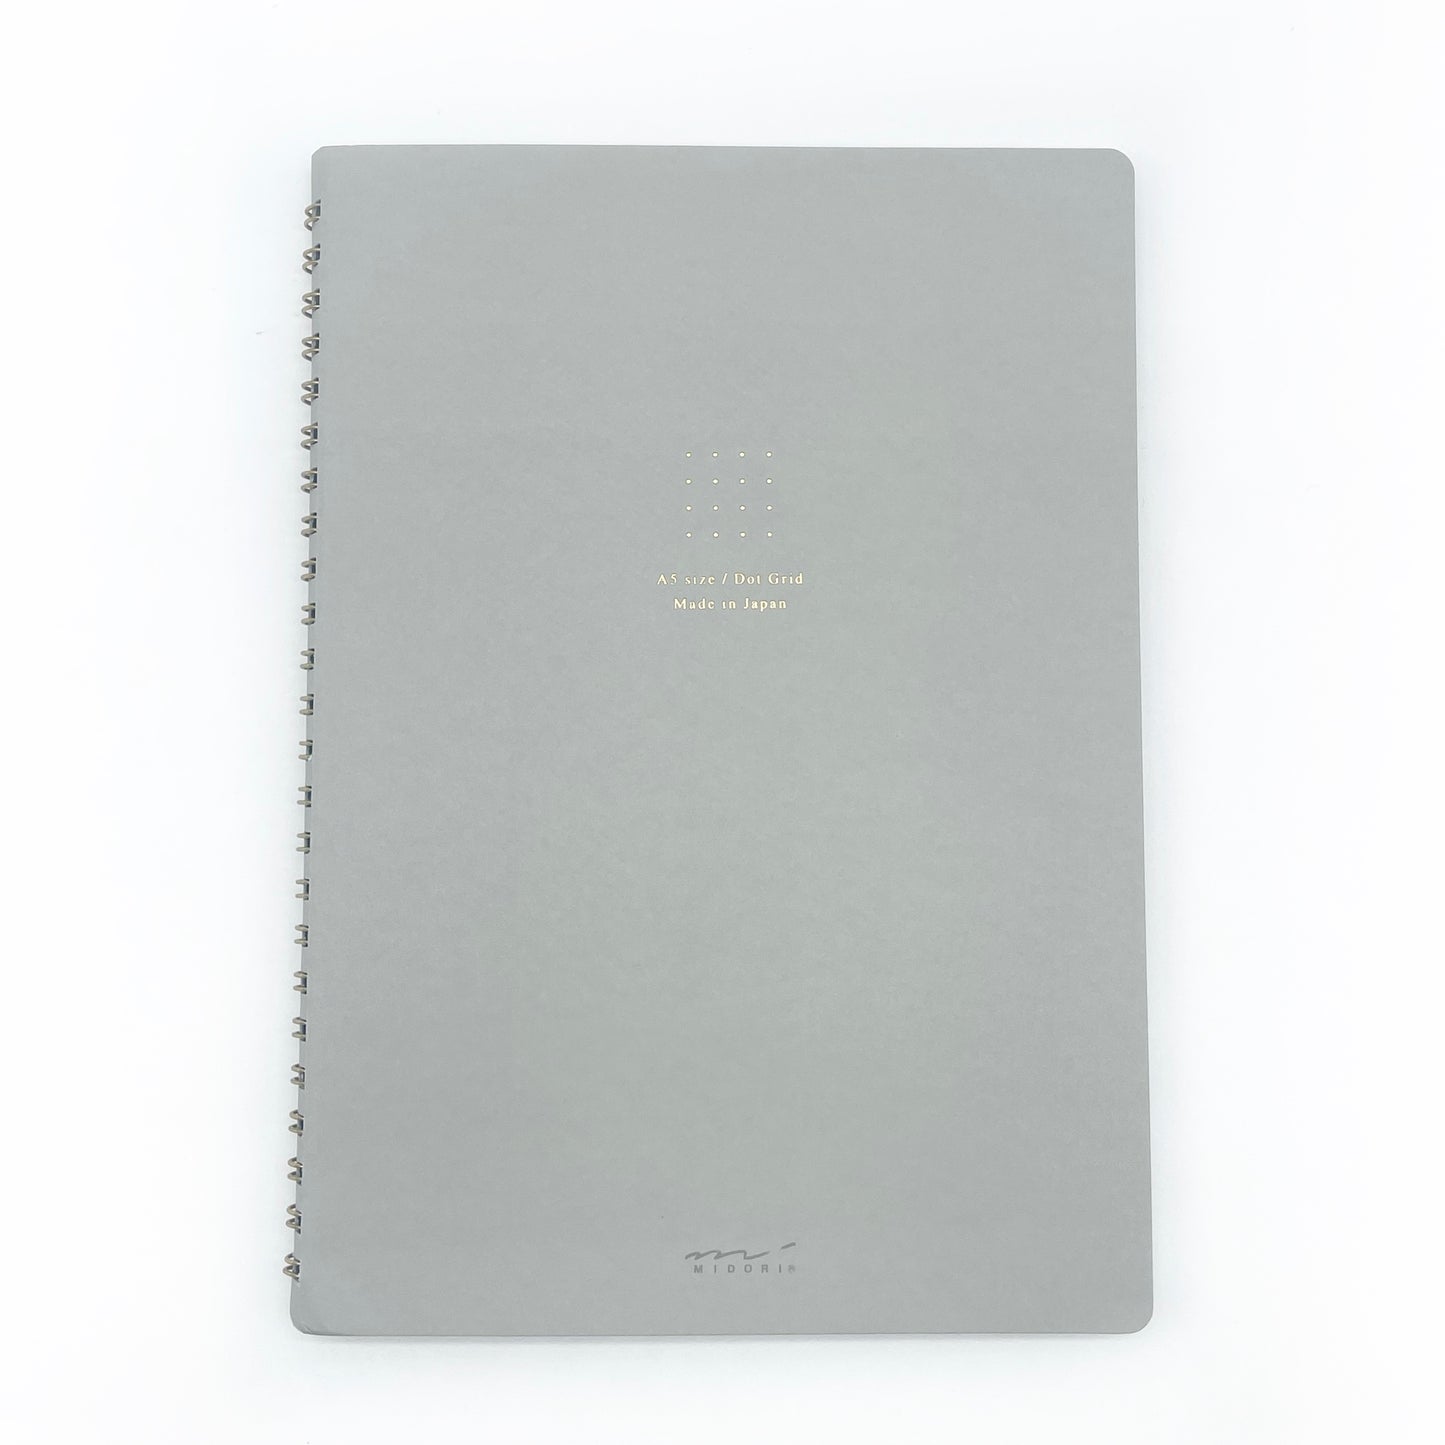 Midori Colour A5 Coil Notebook - Dot Grid